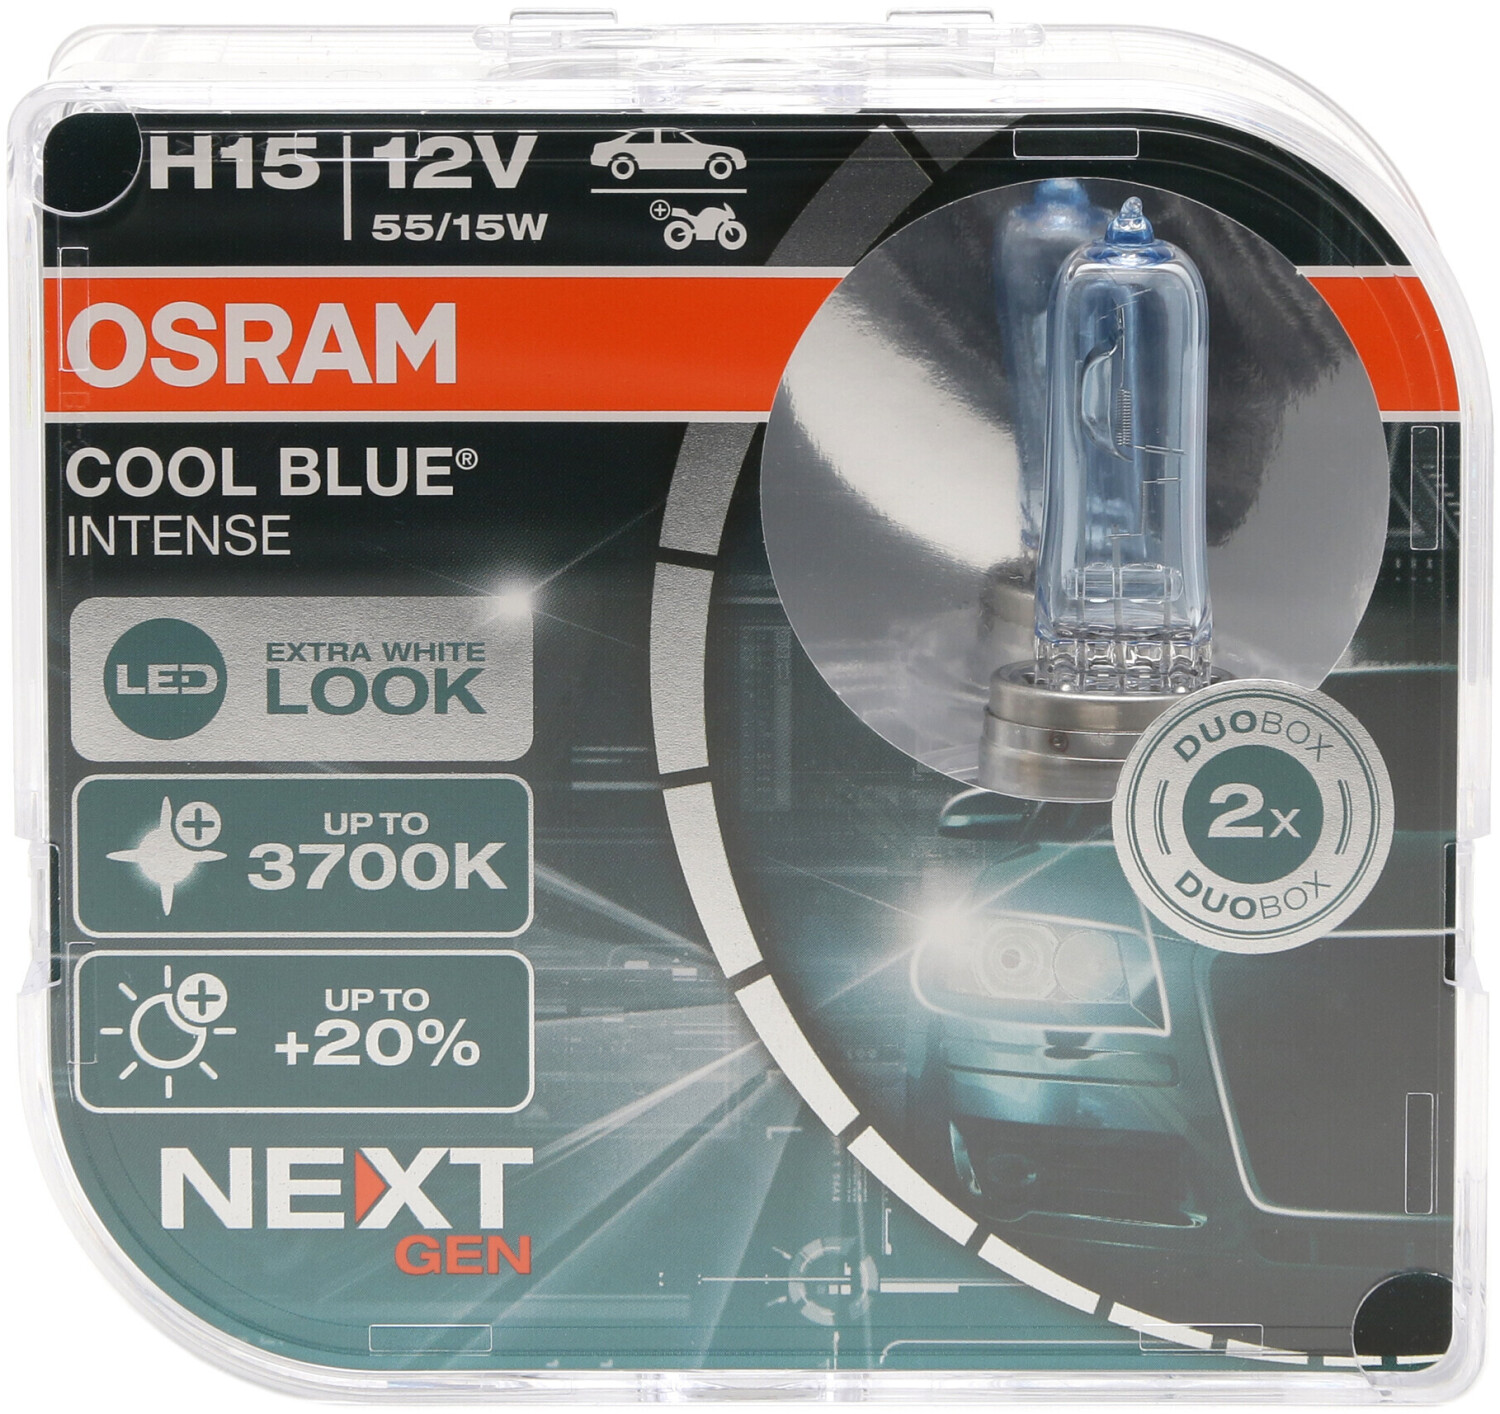 OSRAM COOL BLUE Intense® Xenon LED Optik H1 Sockel 55W DuoBox (2 Stück)